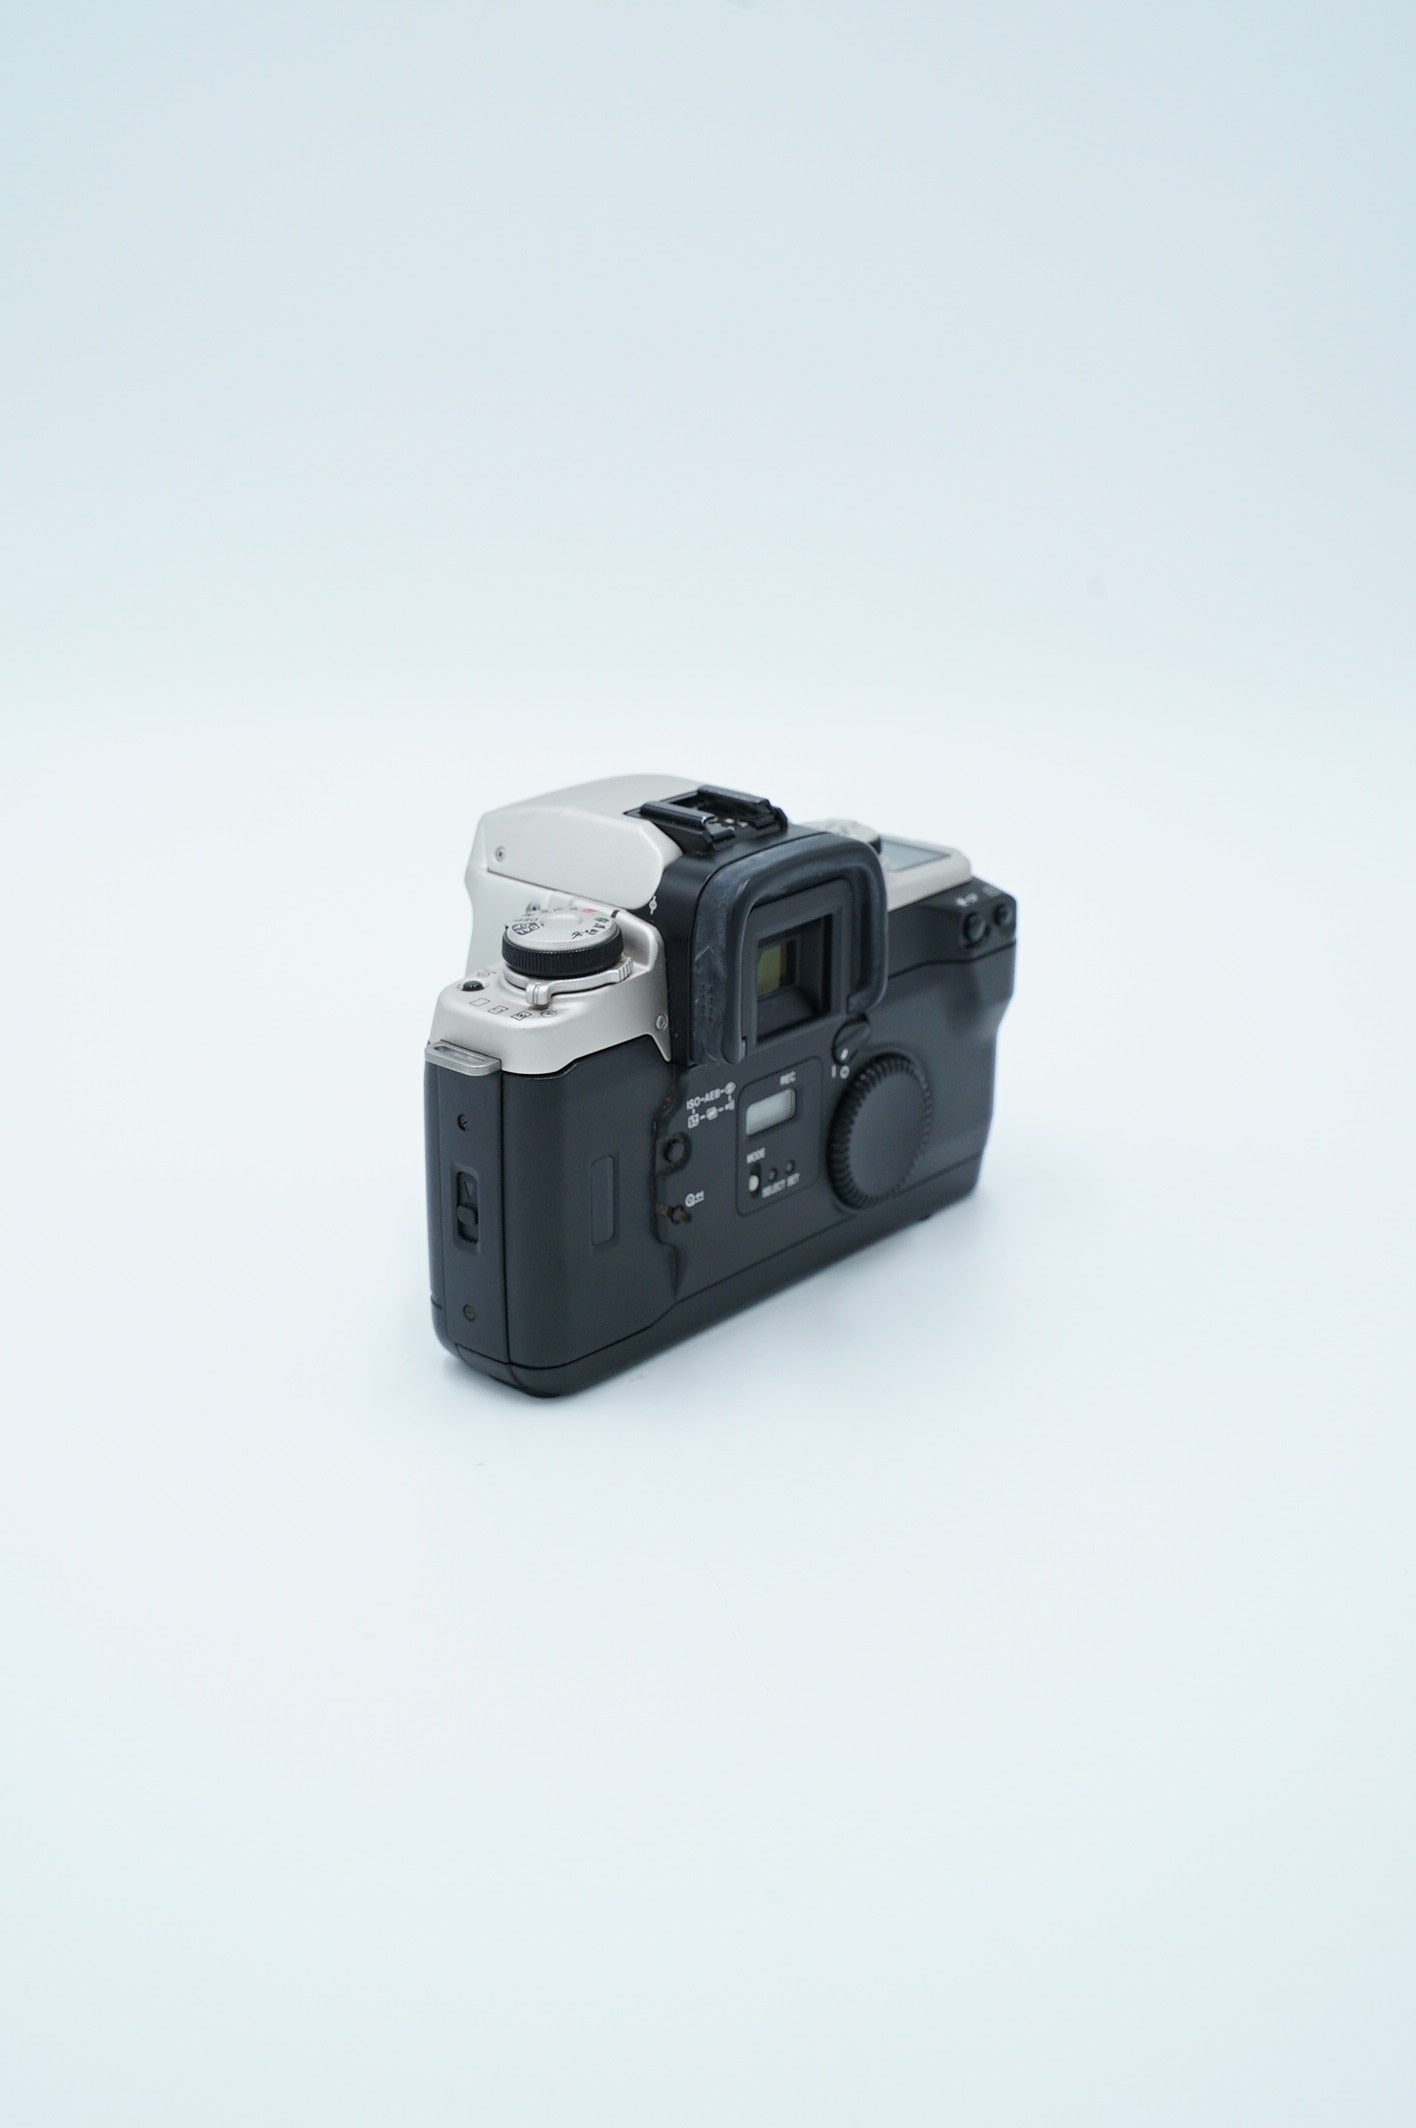 Canon EOSELANIIE/58277 EOS Elan II E 35mm Film Camera Body Only, Used